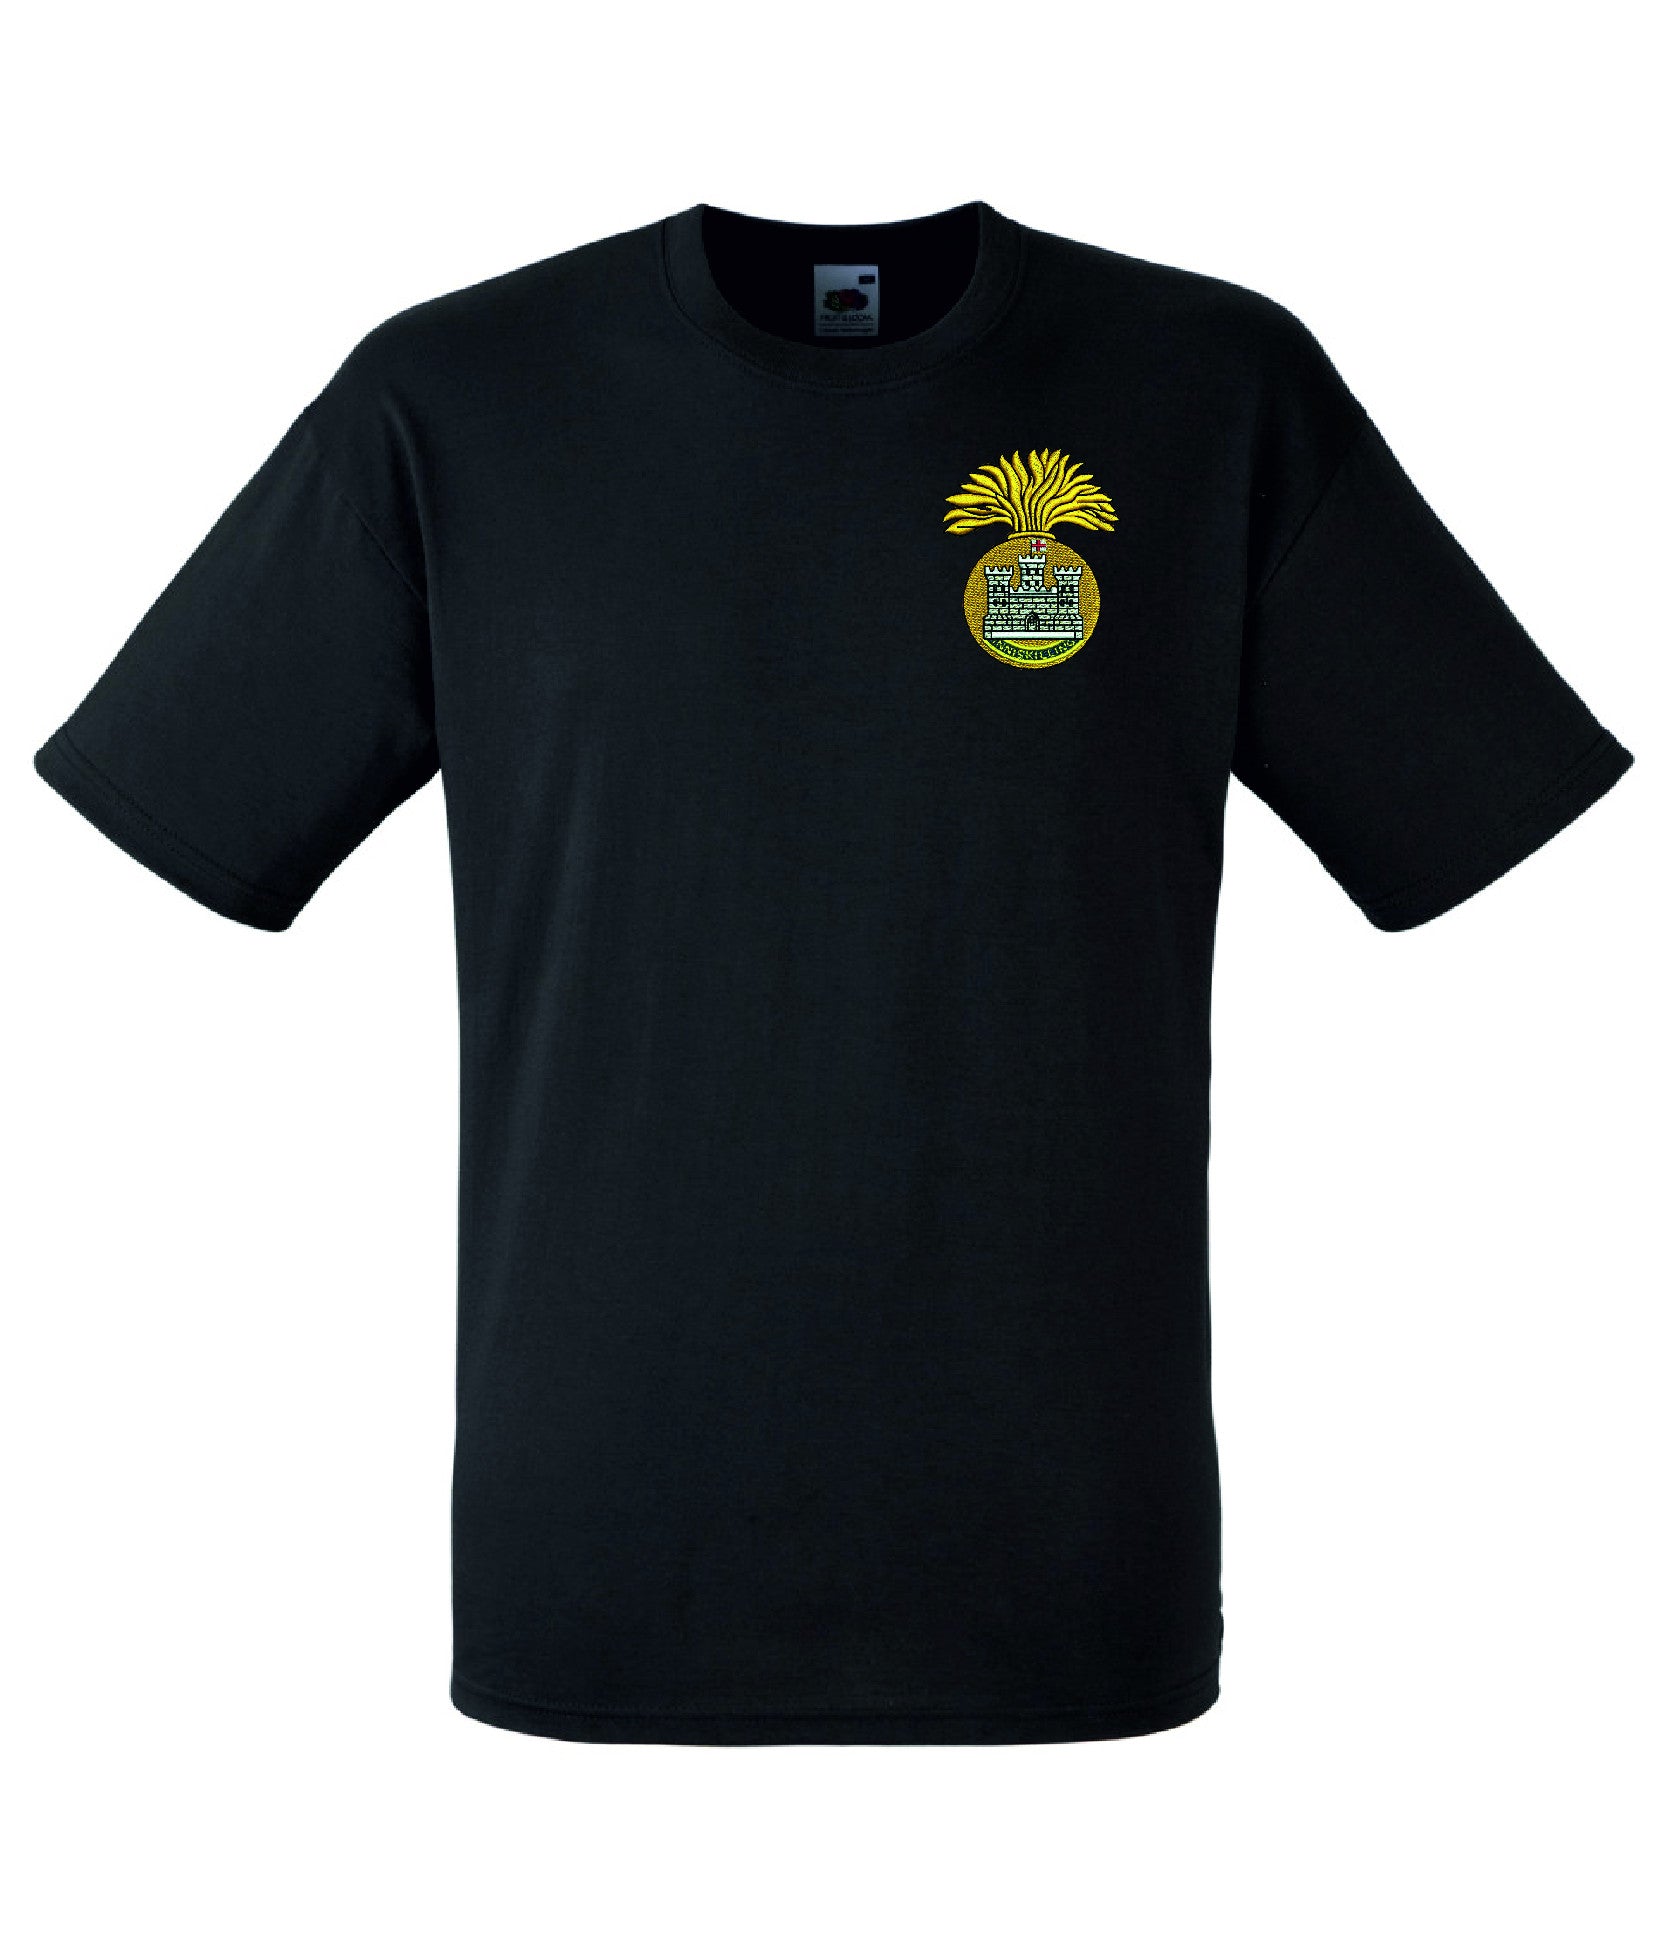 Royal Inniskilling Fusiliers T Shirt